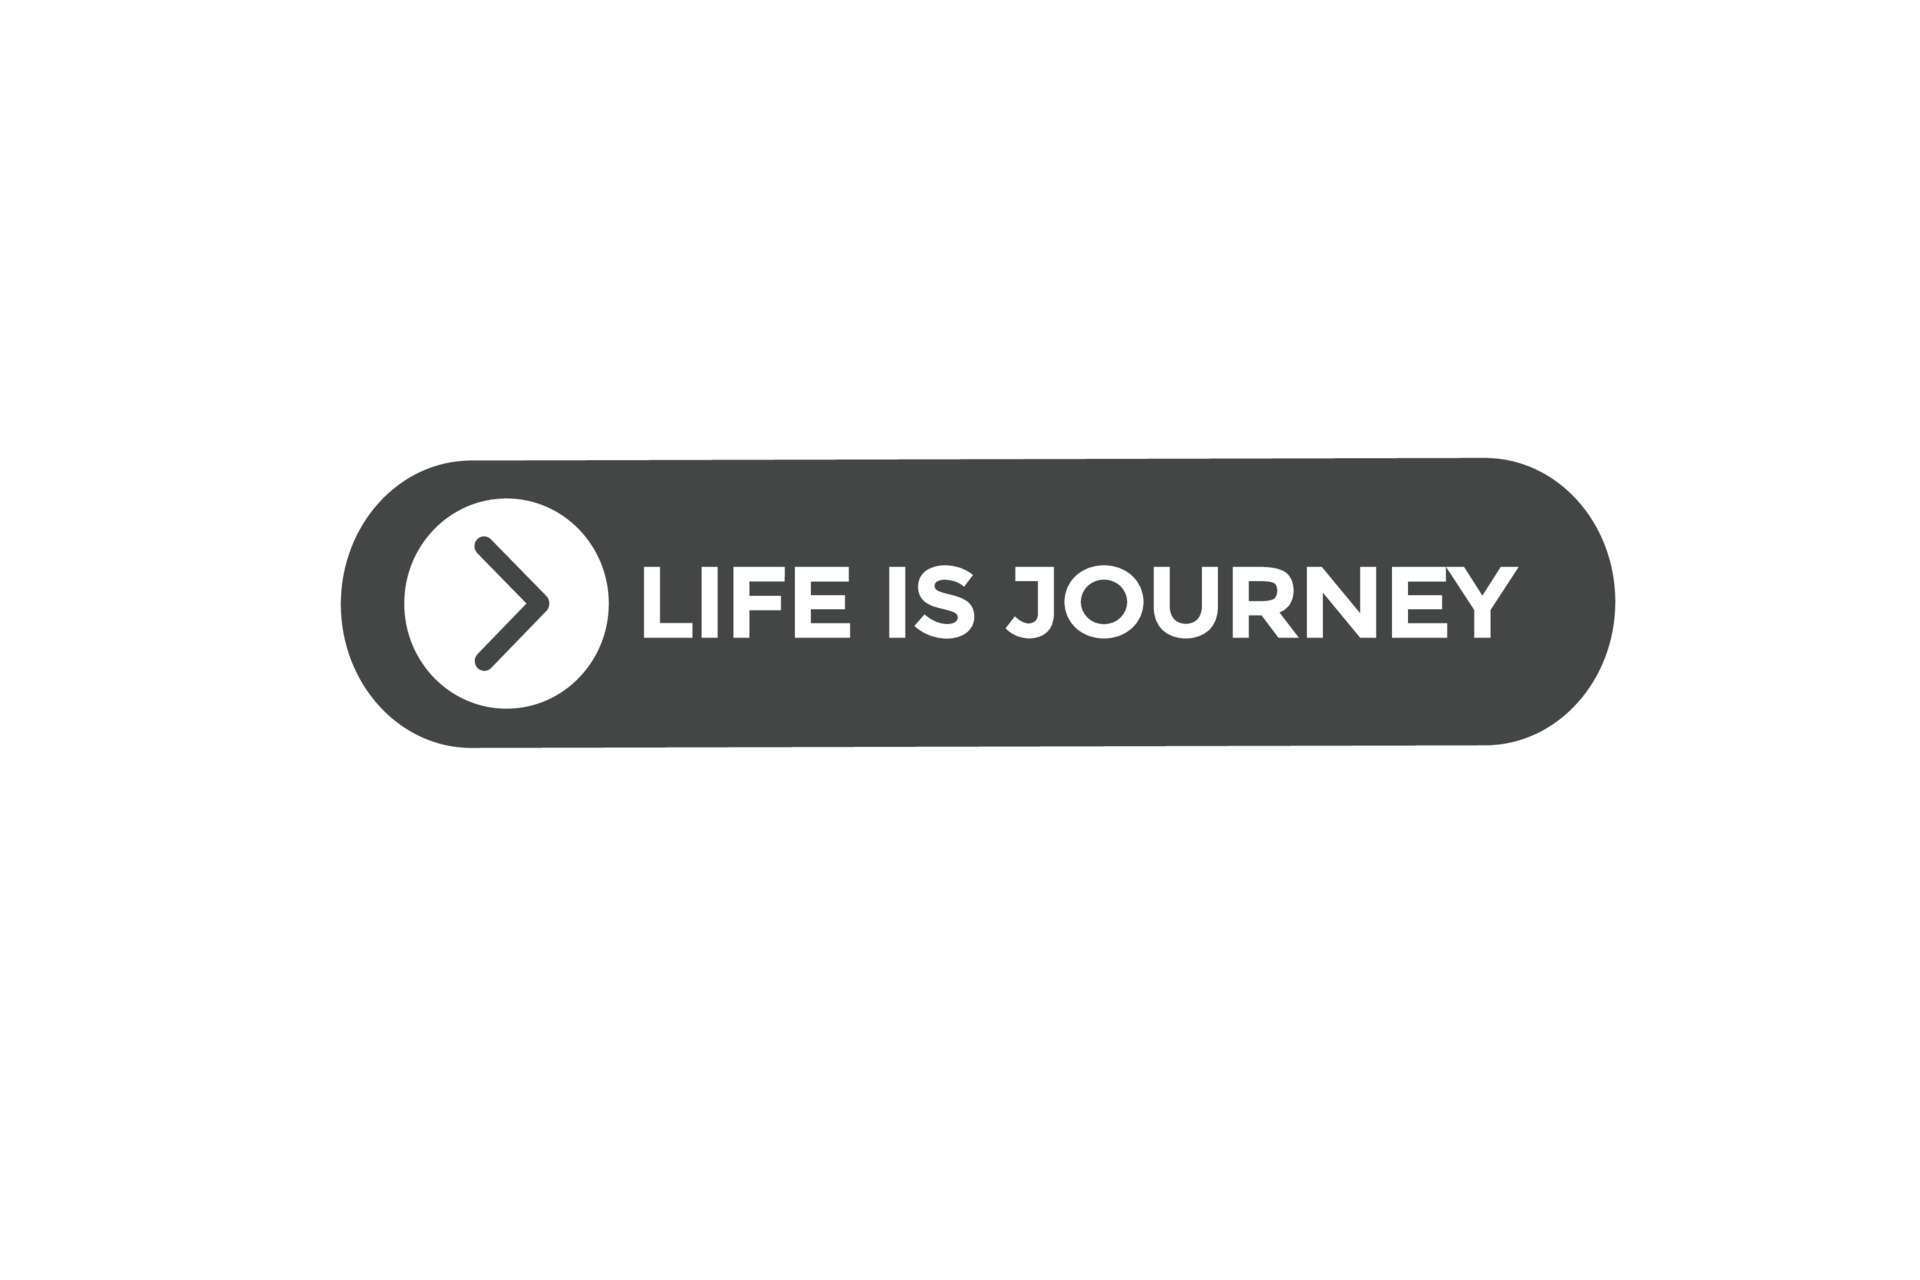 life is journey vectors.sign label bubble speech life is journey ...